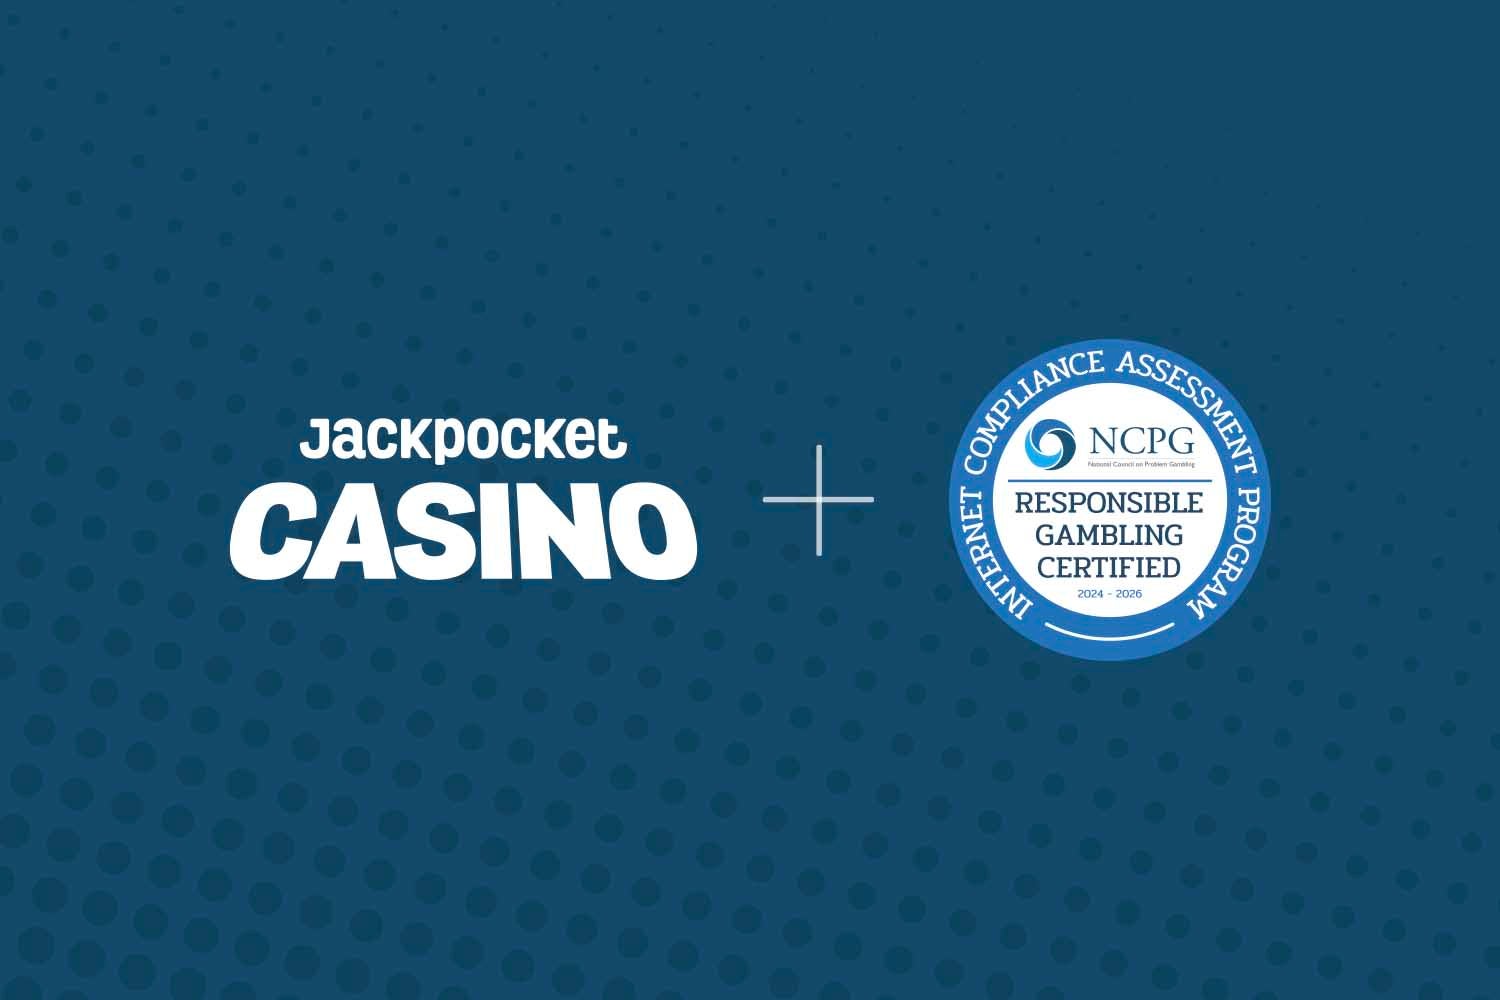 Jackpocket Casino achieves iCAP responsible gambling certification